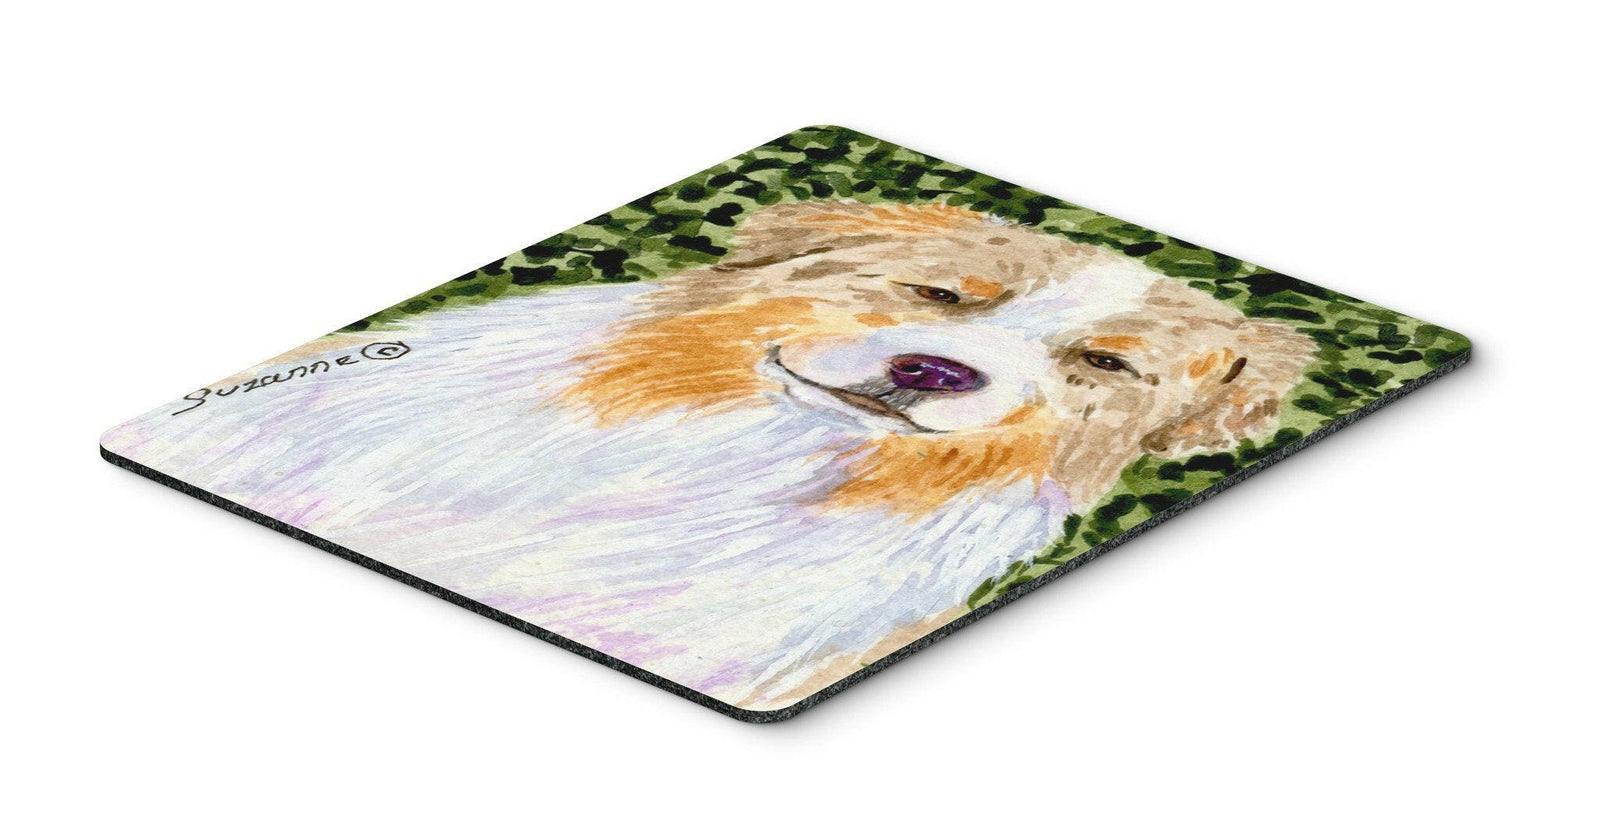 Australian Shepherd Mouse Pad / Hot Pad / Trivet by Caroline's Treasures